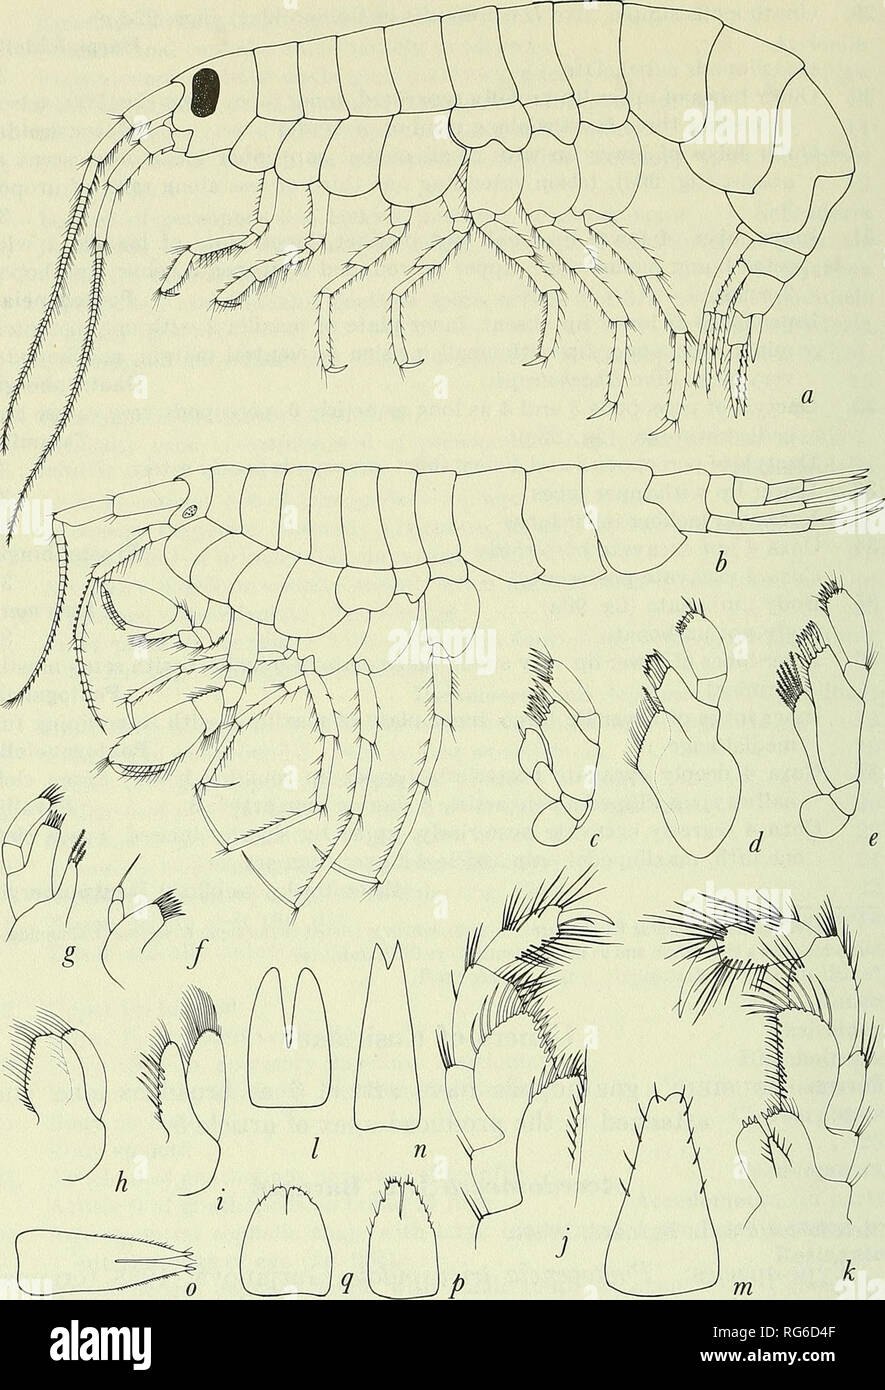 . Bulletin - United States National Museum. Science. 220 U.S. NATIONAL MUSEUM BULLETIN 271. Figure 9L—^Eusiridae: a, Pontogeneia inermis (Krj^yer) (Sars, 1895, pi. 159); b, Cleonardo appendiculatus (Sars, 1885). Maxilla 1: c, Eusirus propinquus Sars (Sars, 1895, pi. 147); d, Eurymera monticulosa Pfeffer (Chevreux, 1906c); e, Pontogeneia; /, Eusirella elegans Chevreux (1908b); g, Pseudomoera gahrieli (Sayce, 1901). Maxilla 2: h, Eusirus; i, Pontogeneia. Maxillipeds:  ;', Pontogeneia; k, Eusirus. Telson: 1, Pontogeneia; m, Ponto- geneoides abyssi Nicholls (1938); n, Eusirus minutus Sars (1895, p Stock Photo